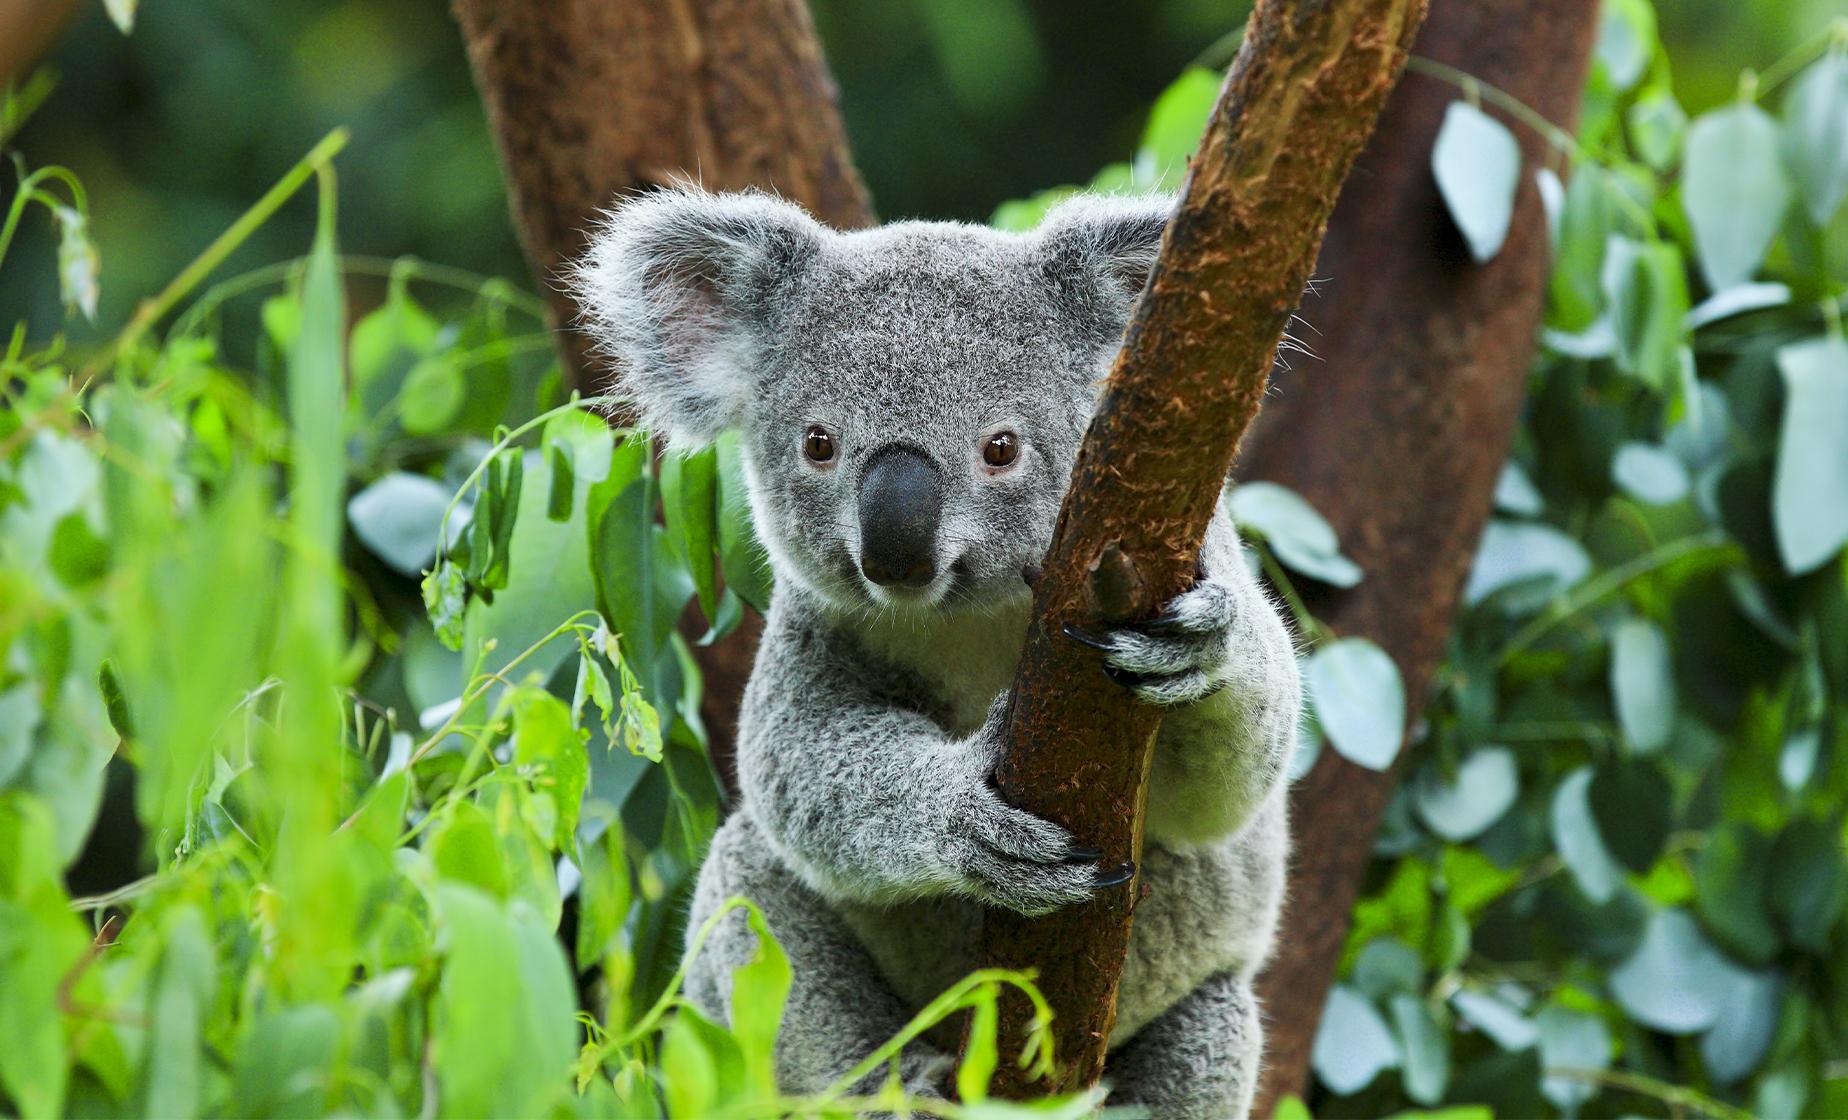 Koala Sanctuary and Brisbane River Cruise Express